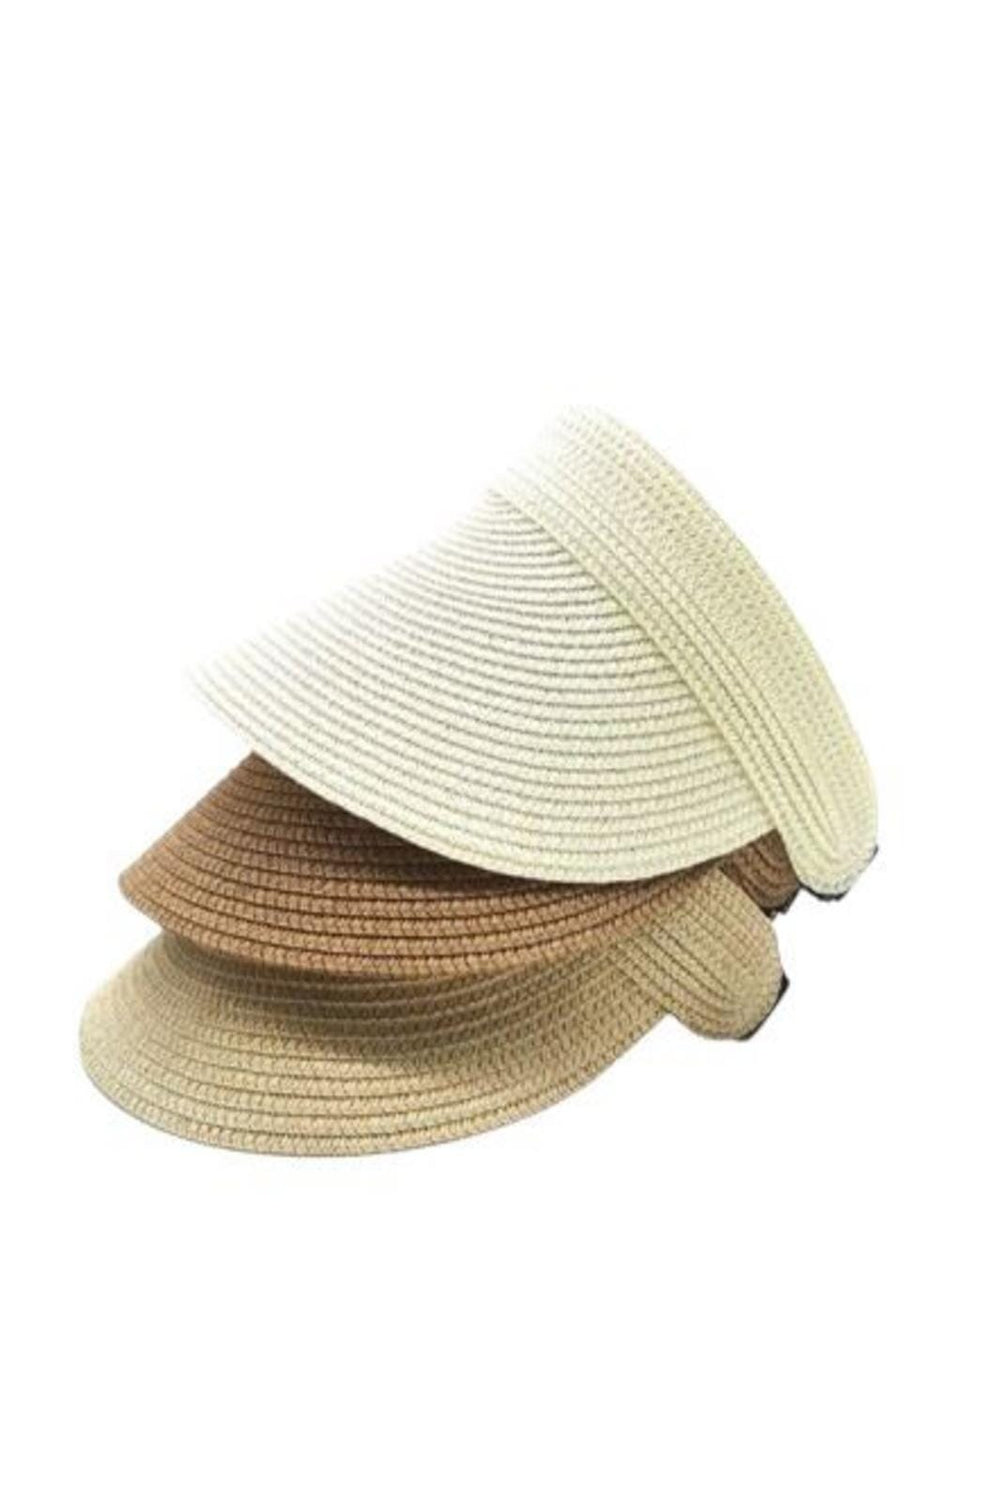 Anobel Copenhagen - Visor Straw Elastic Hat Xm3090 - Cream Hatte 